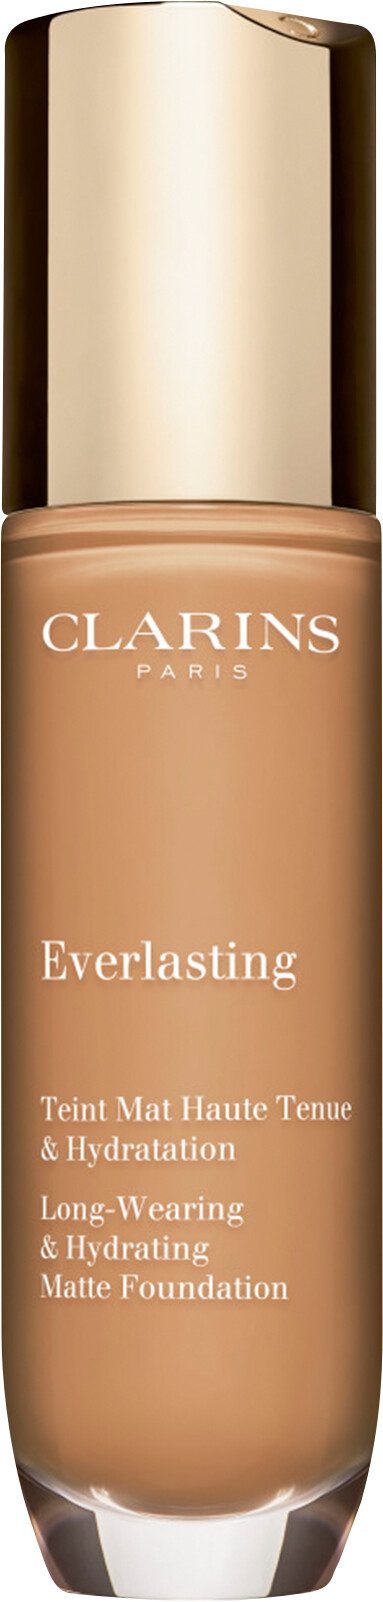 Clarins Everlasting Long-Wearing & Hydrating Matte Foundation 30ml 112.3N - Sandalwood